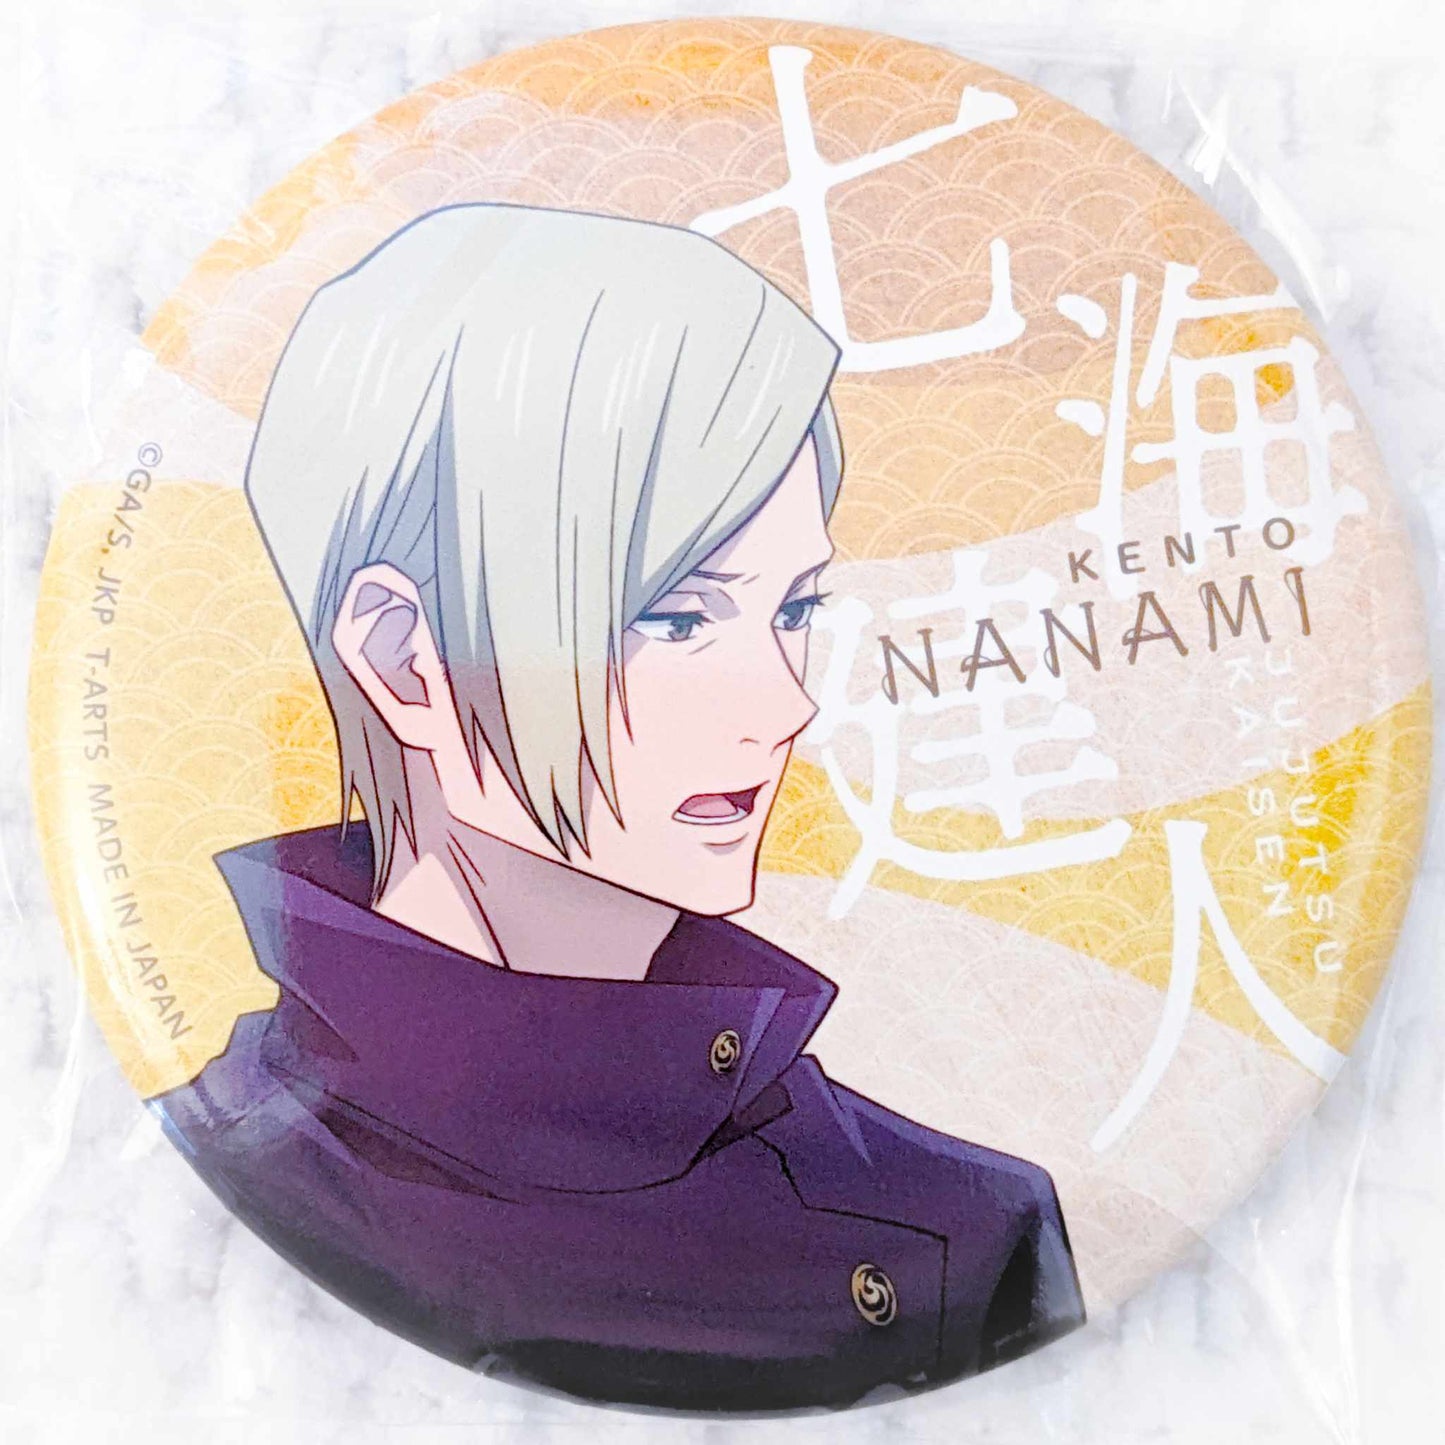 Kento Nanami - Jujutsu Kaisen Anime 2nd Season Rest ver. Pin Badge Button